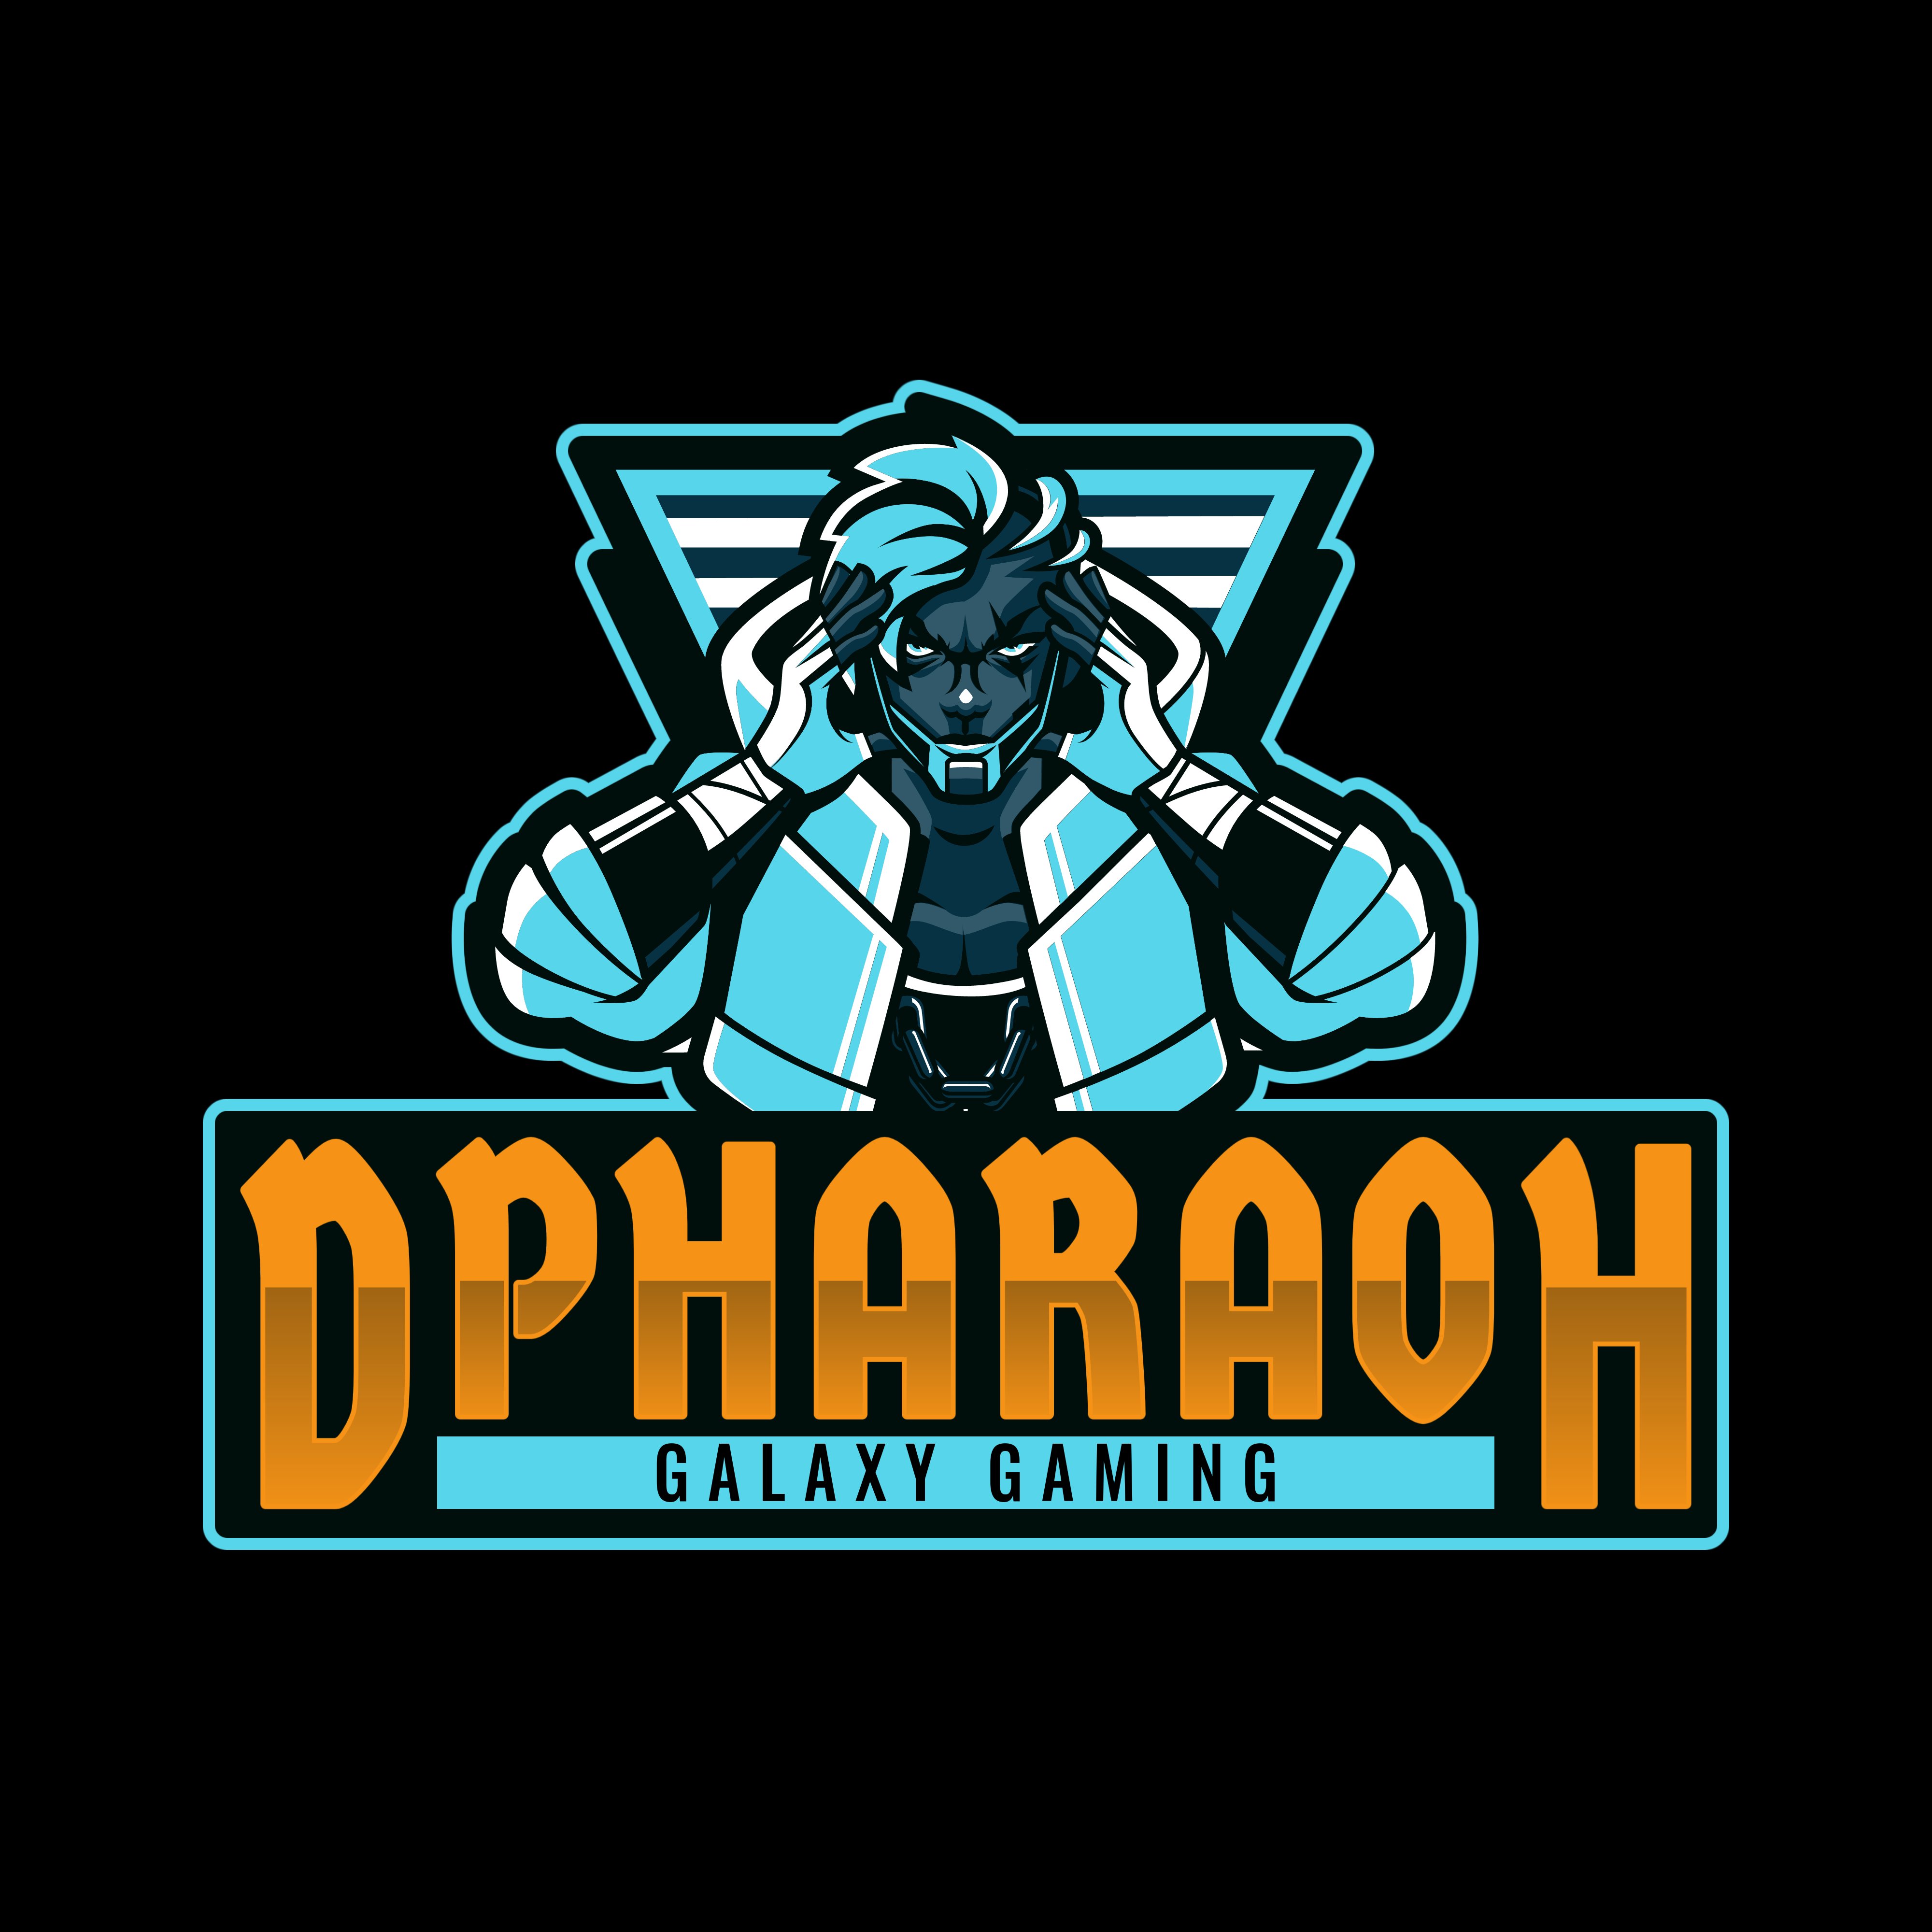 DPharaoh